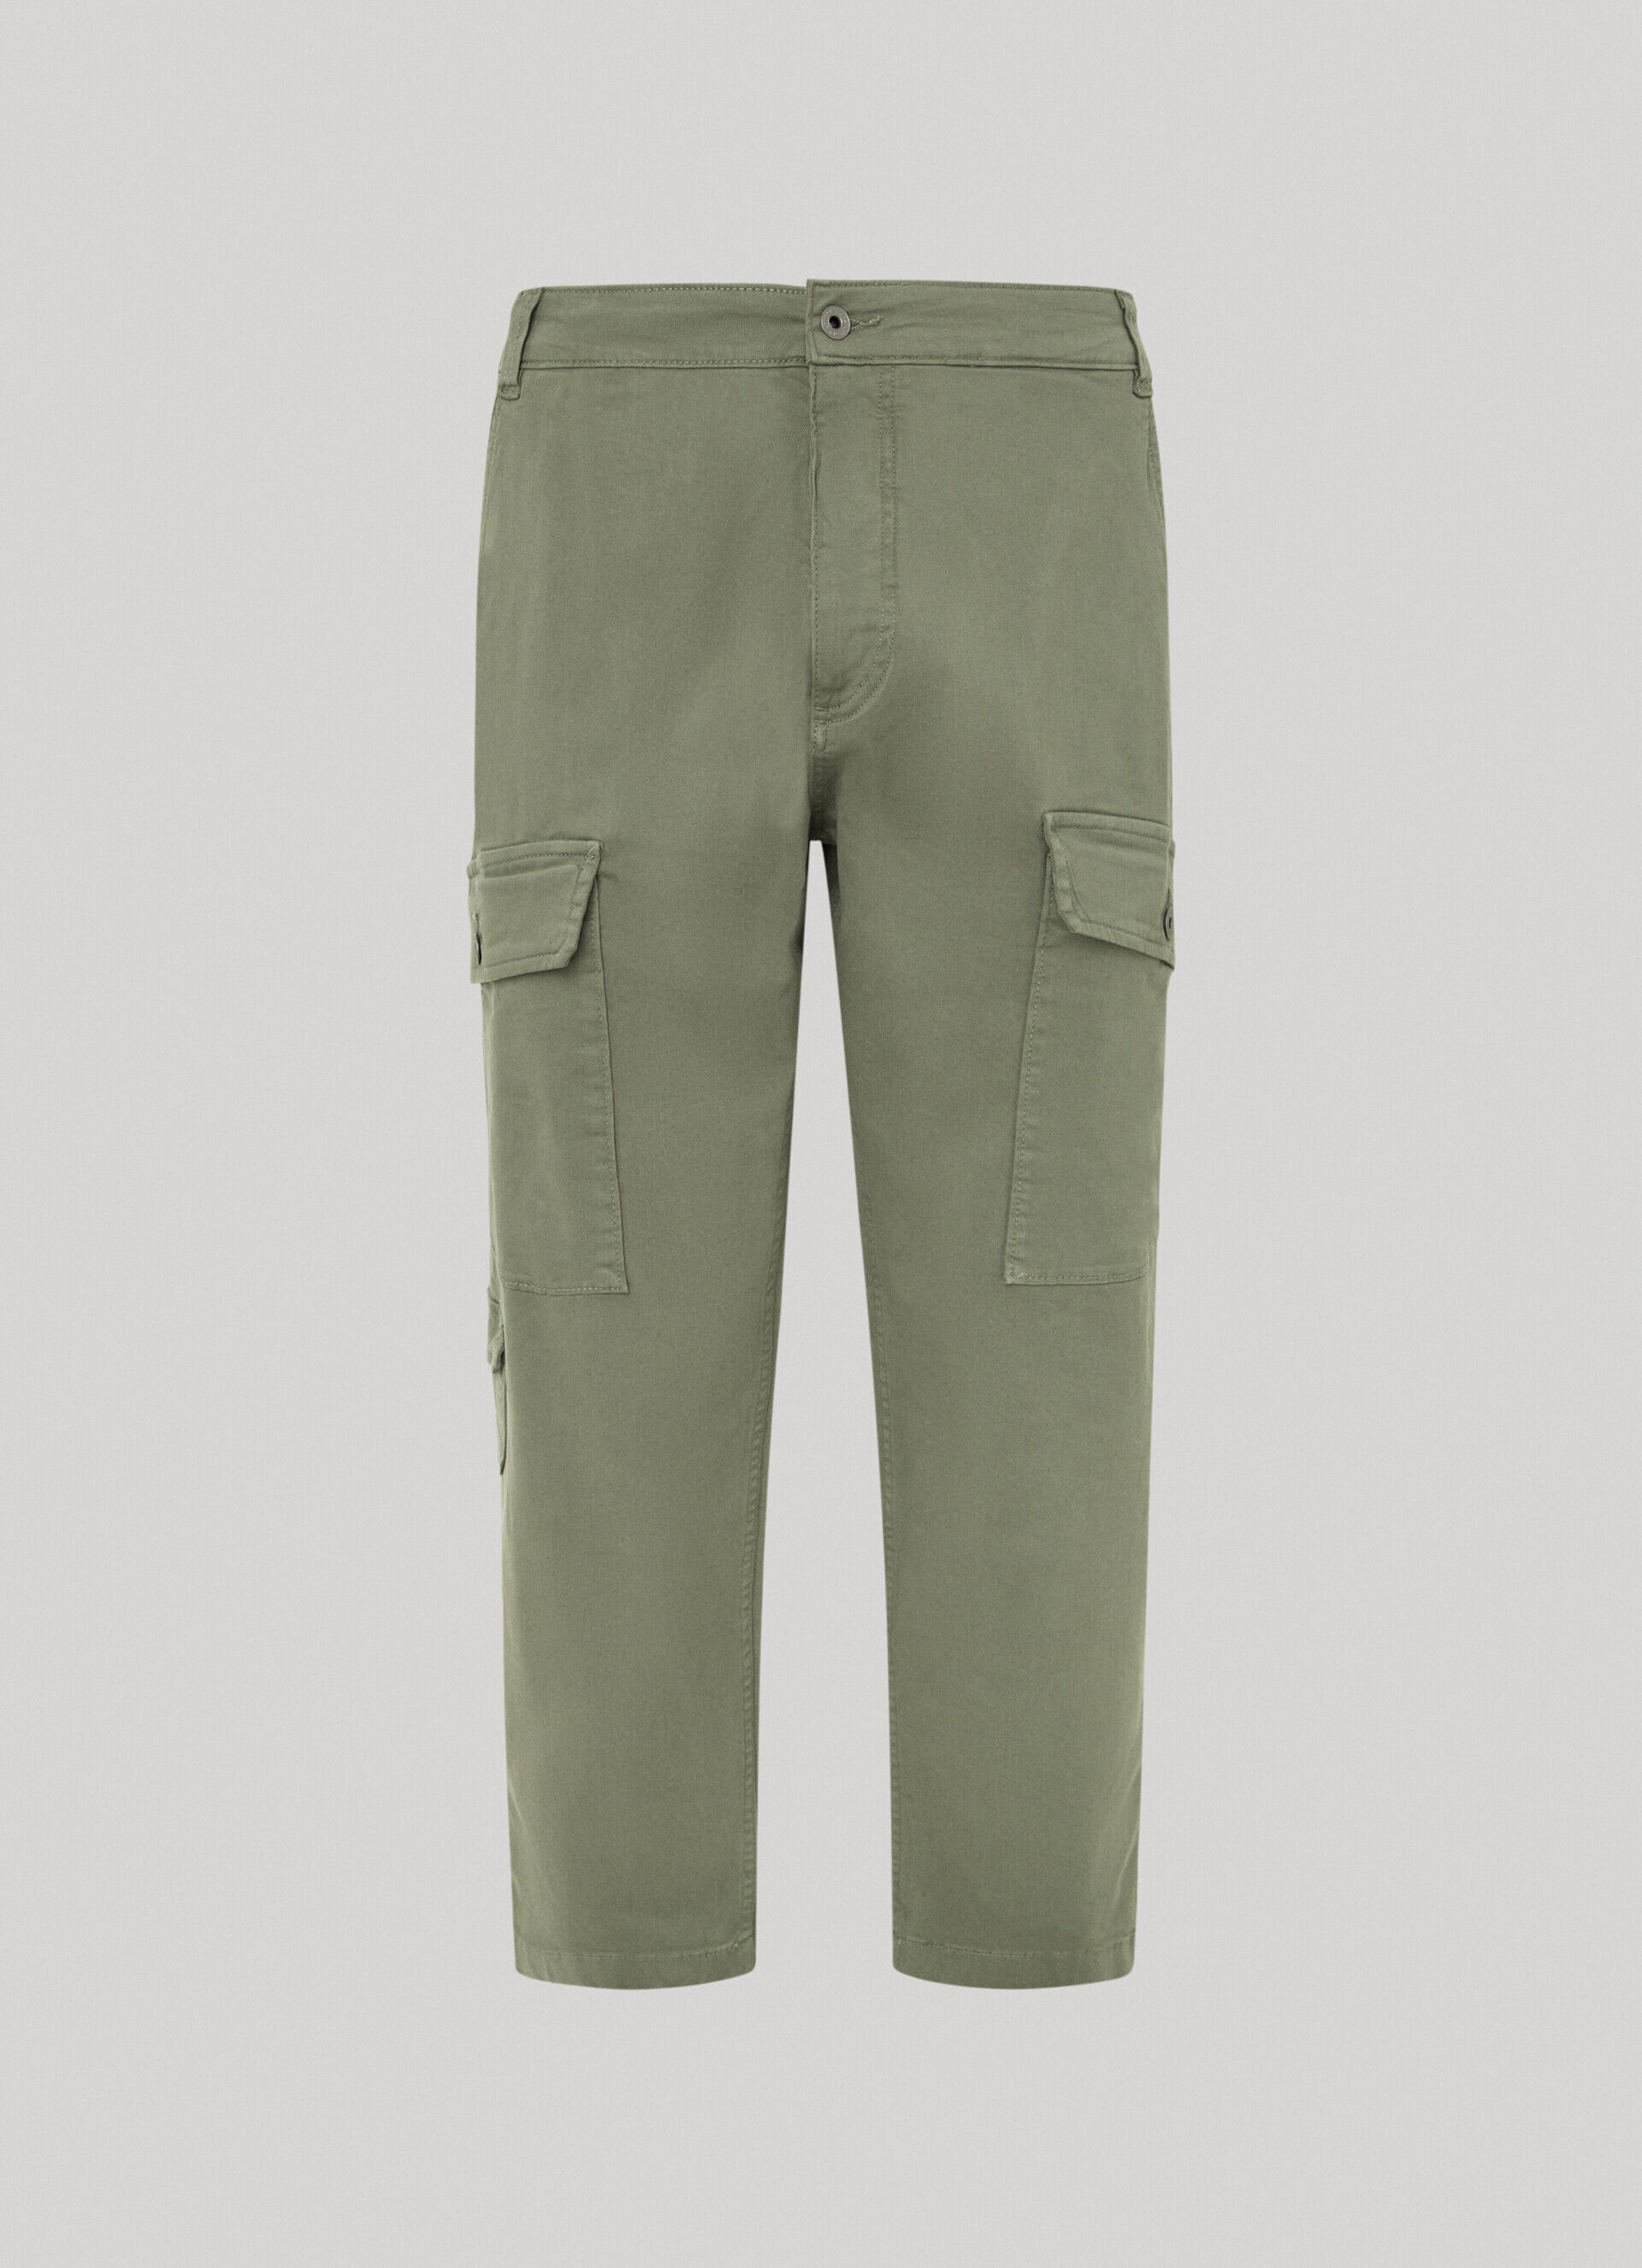 Pepe Jeans London 3 Men's Soft Khaki Cargo Pants Tan Size 36x33 Relaxed Fit  EUC! | eBay